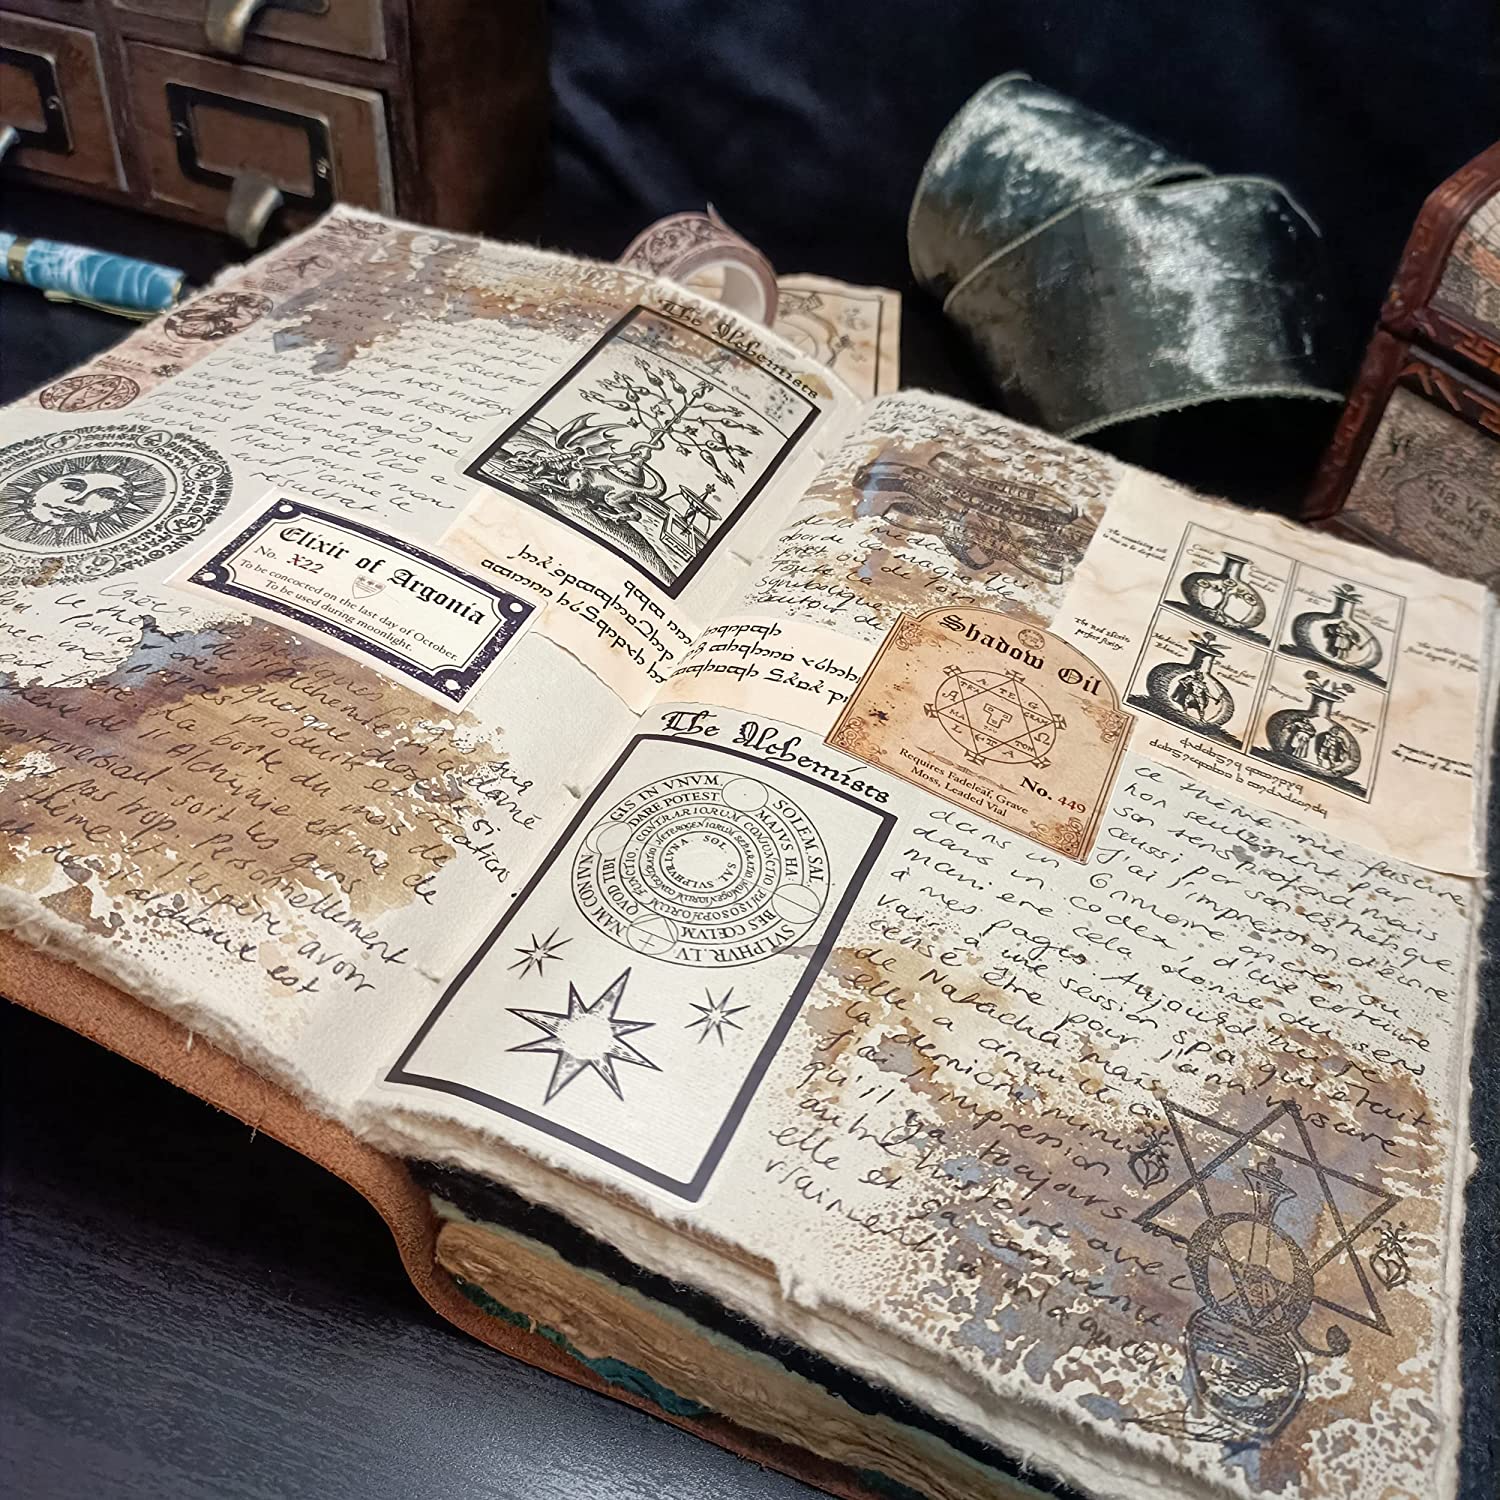 Journal Vintage